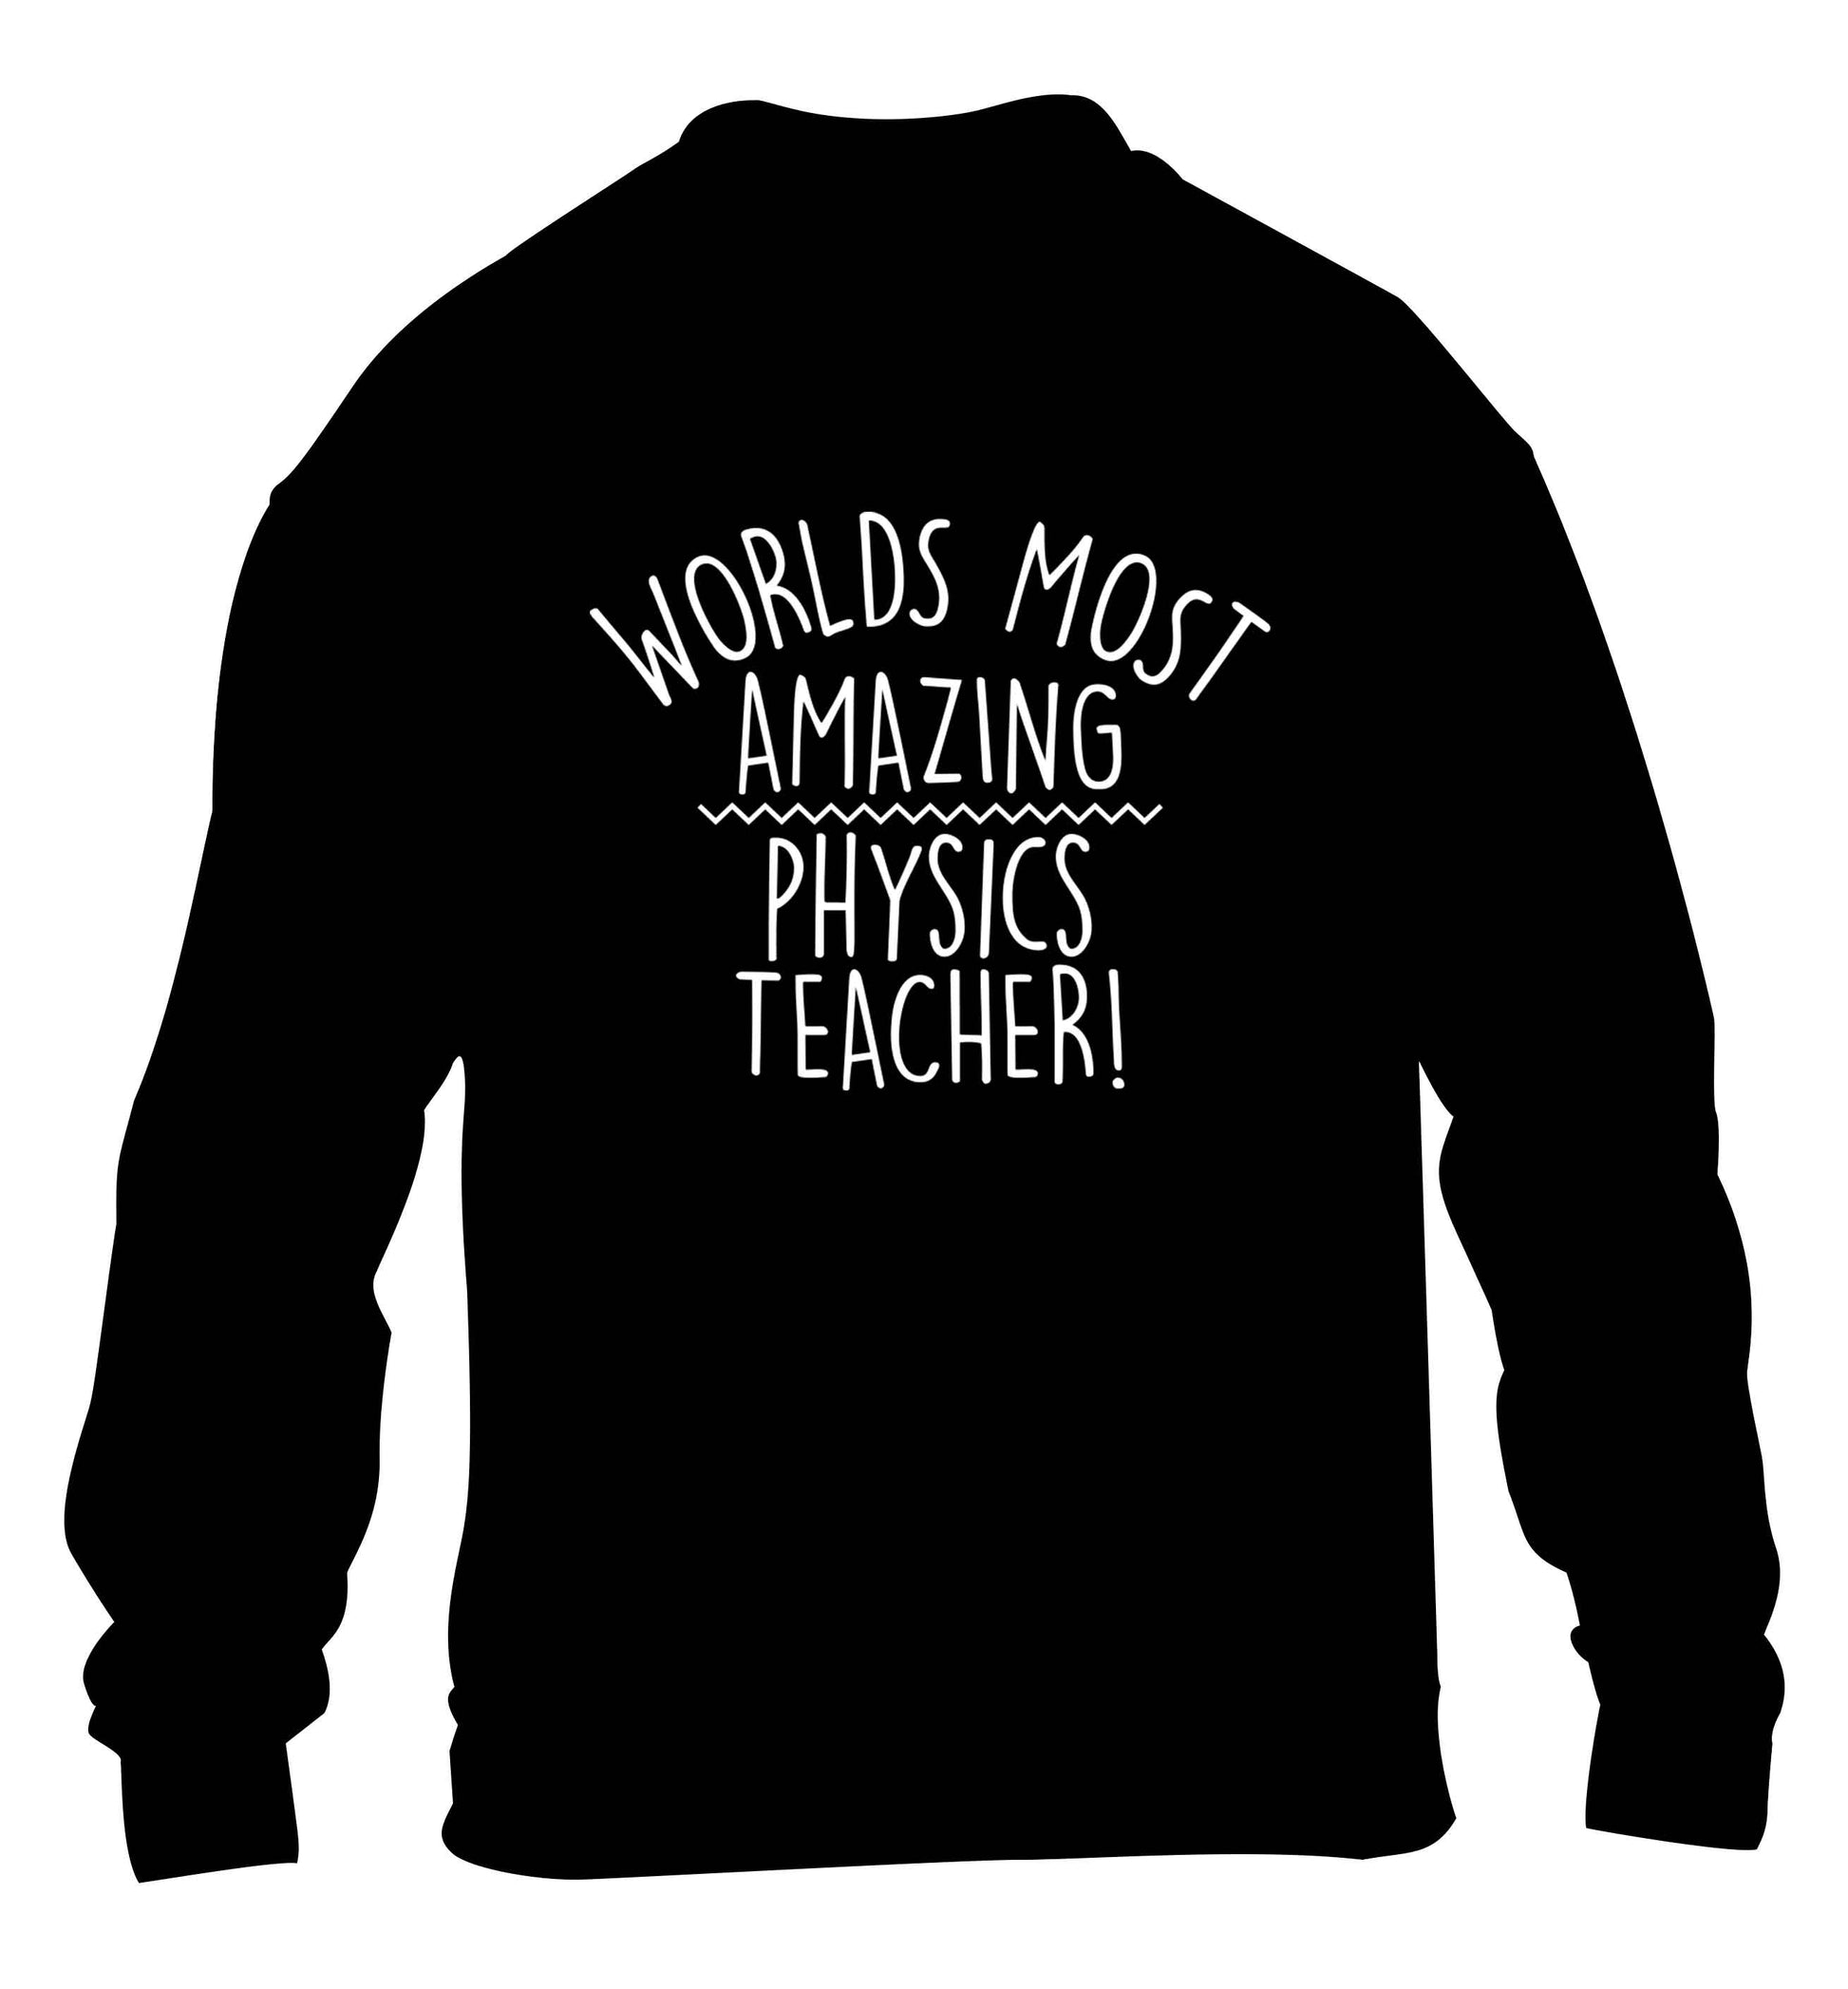 Worlds most amazing physics teacher children's black sweater 12-13 Years